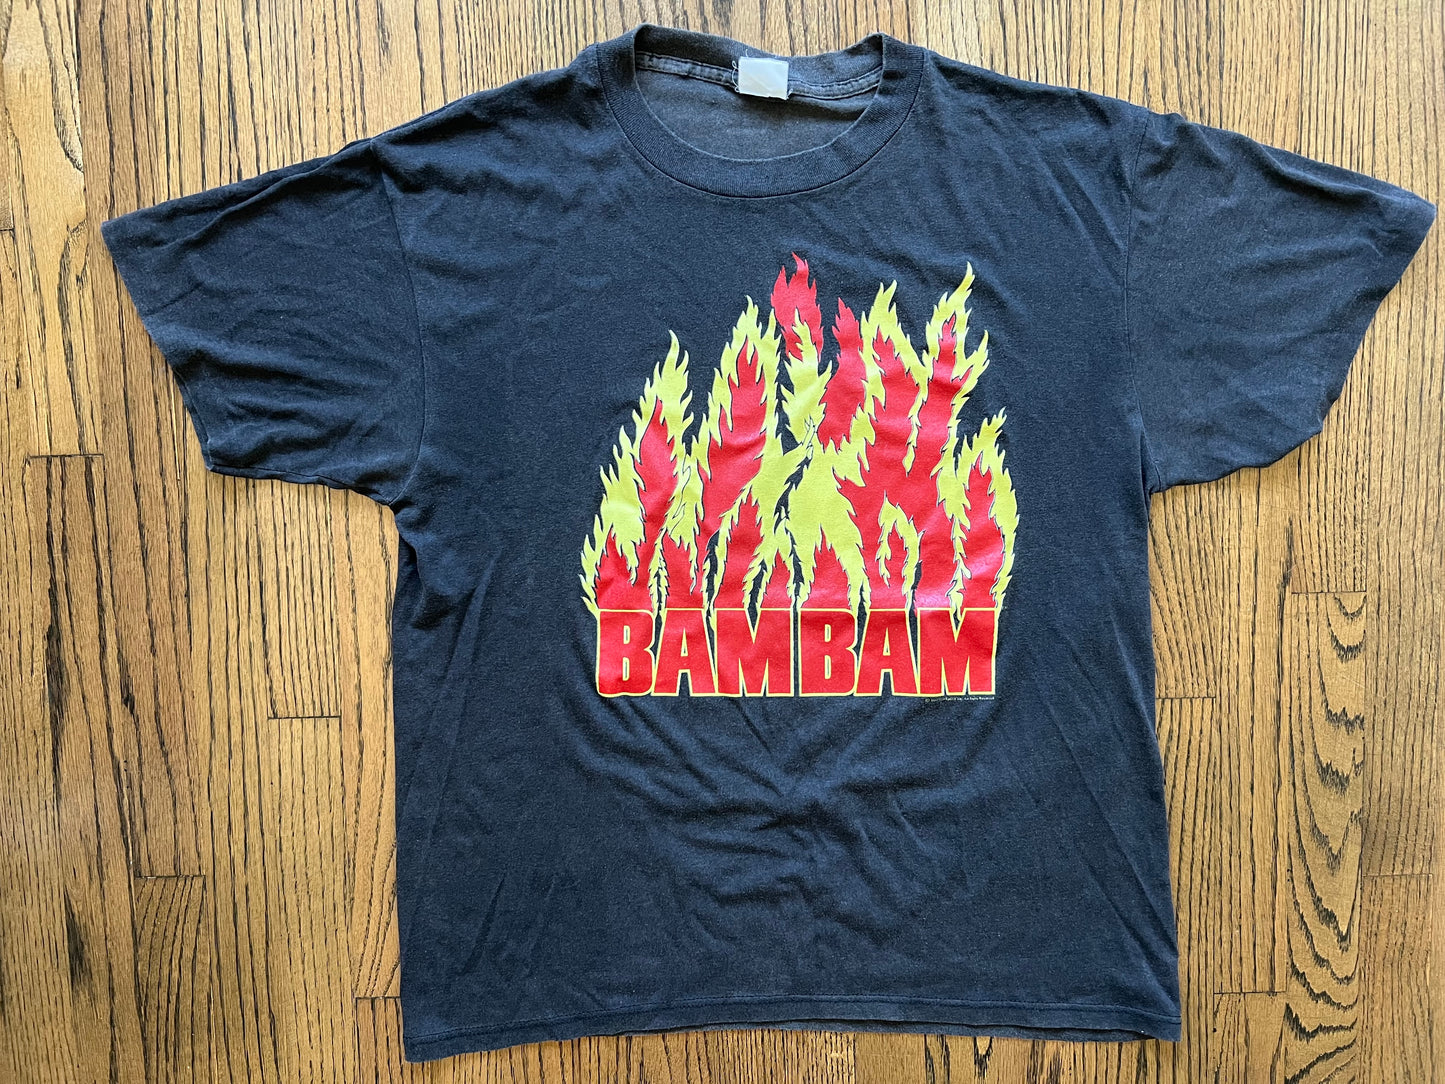 1987 WWF Bam Bam Bigelow shirt